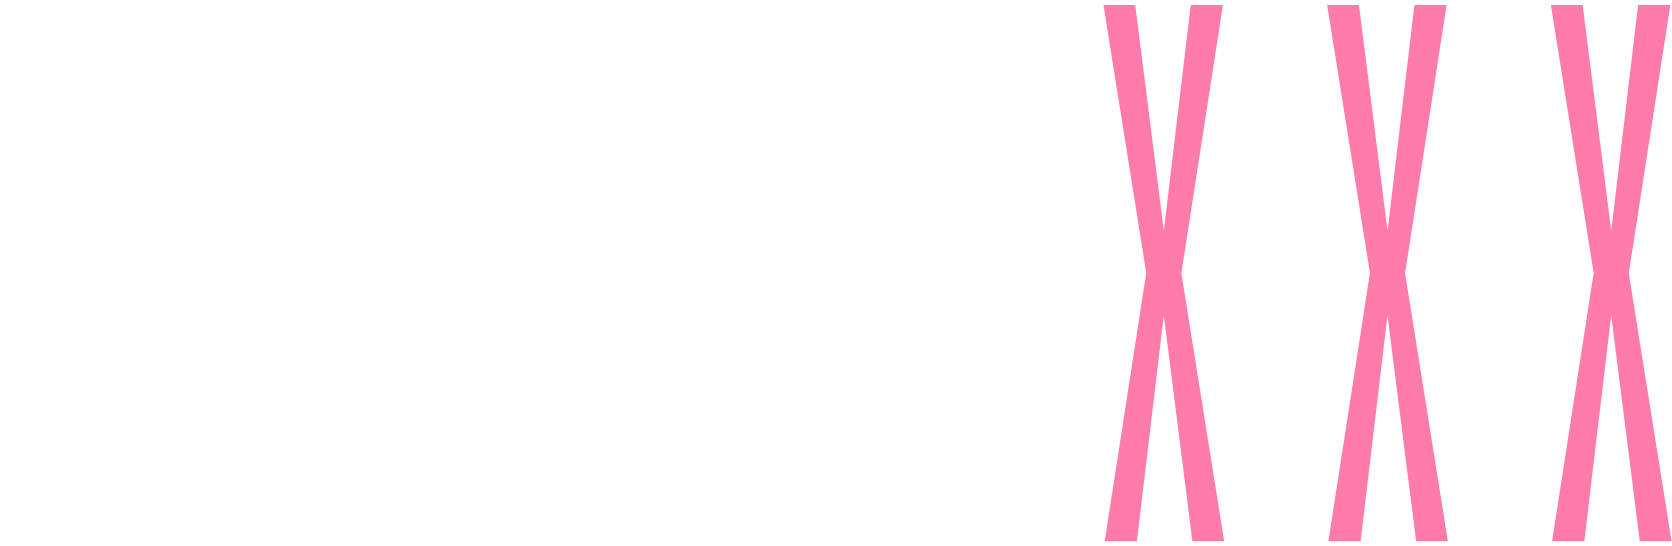 HOTWAXXX logo, pronounced hot wax.